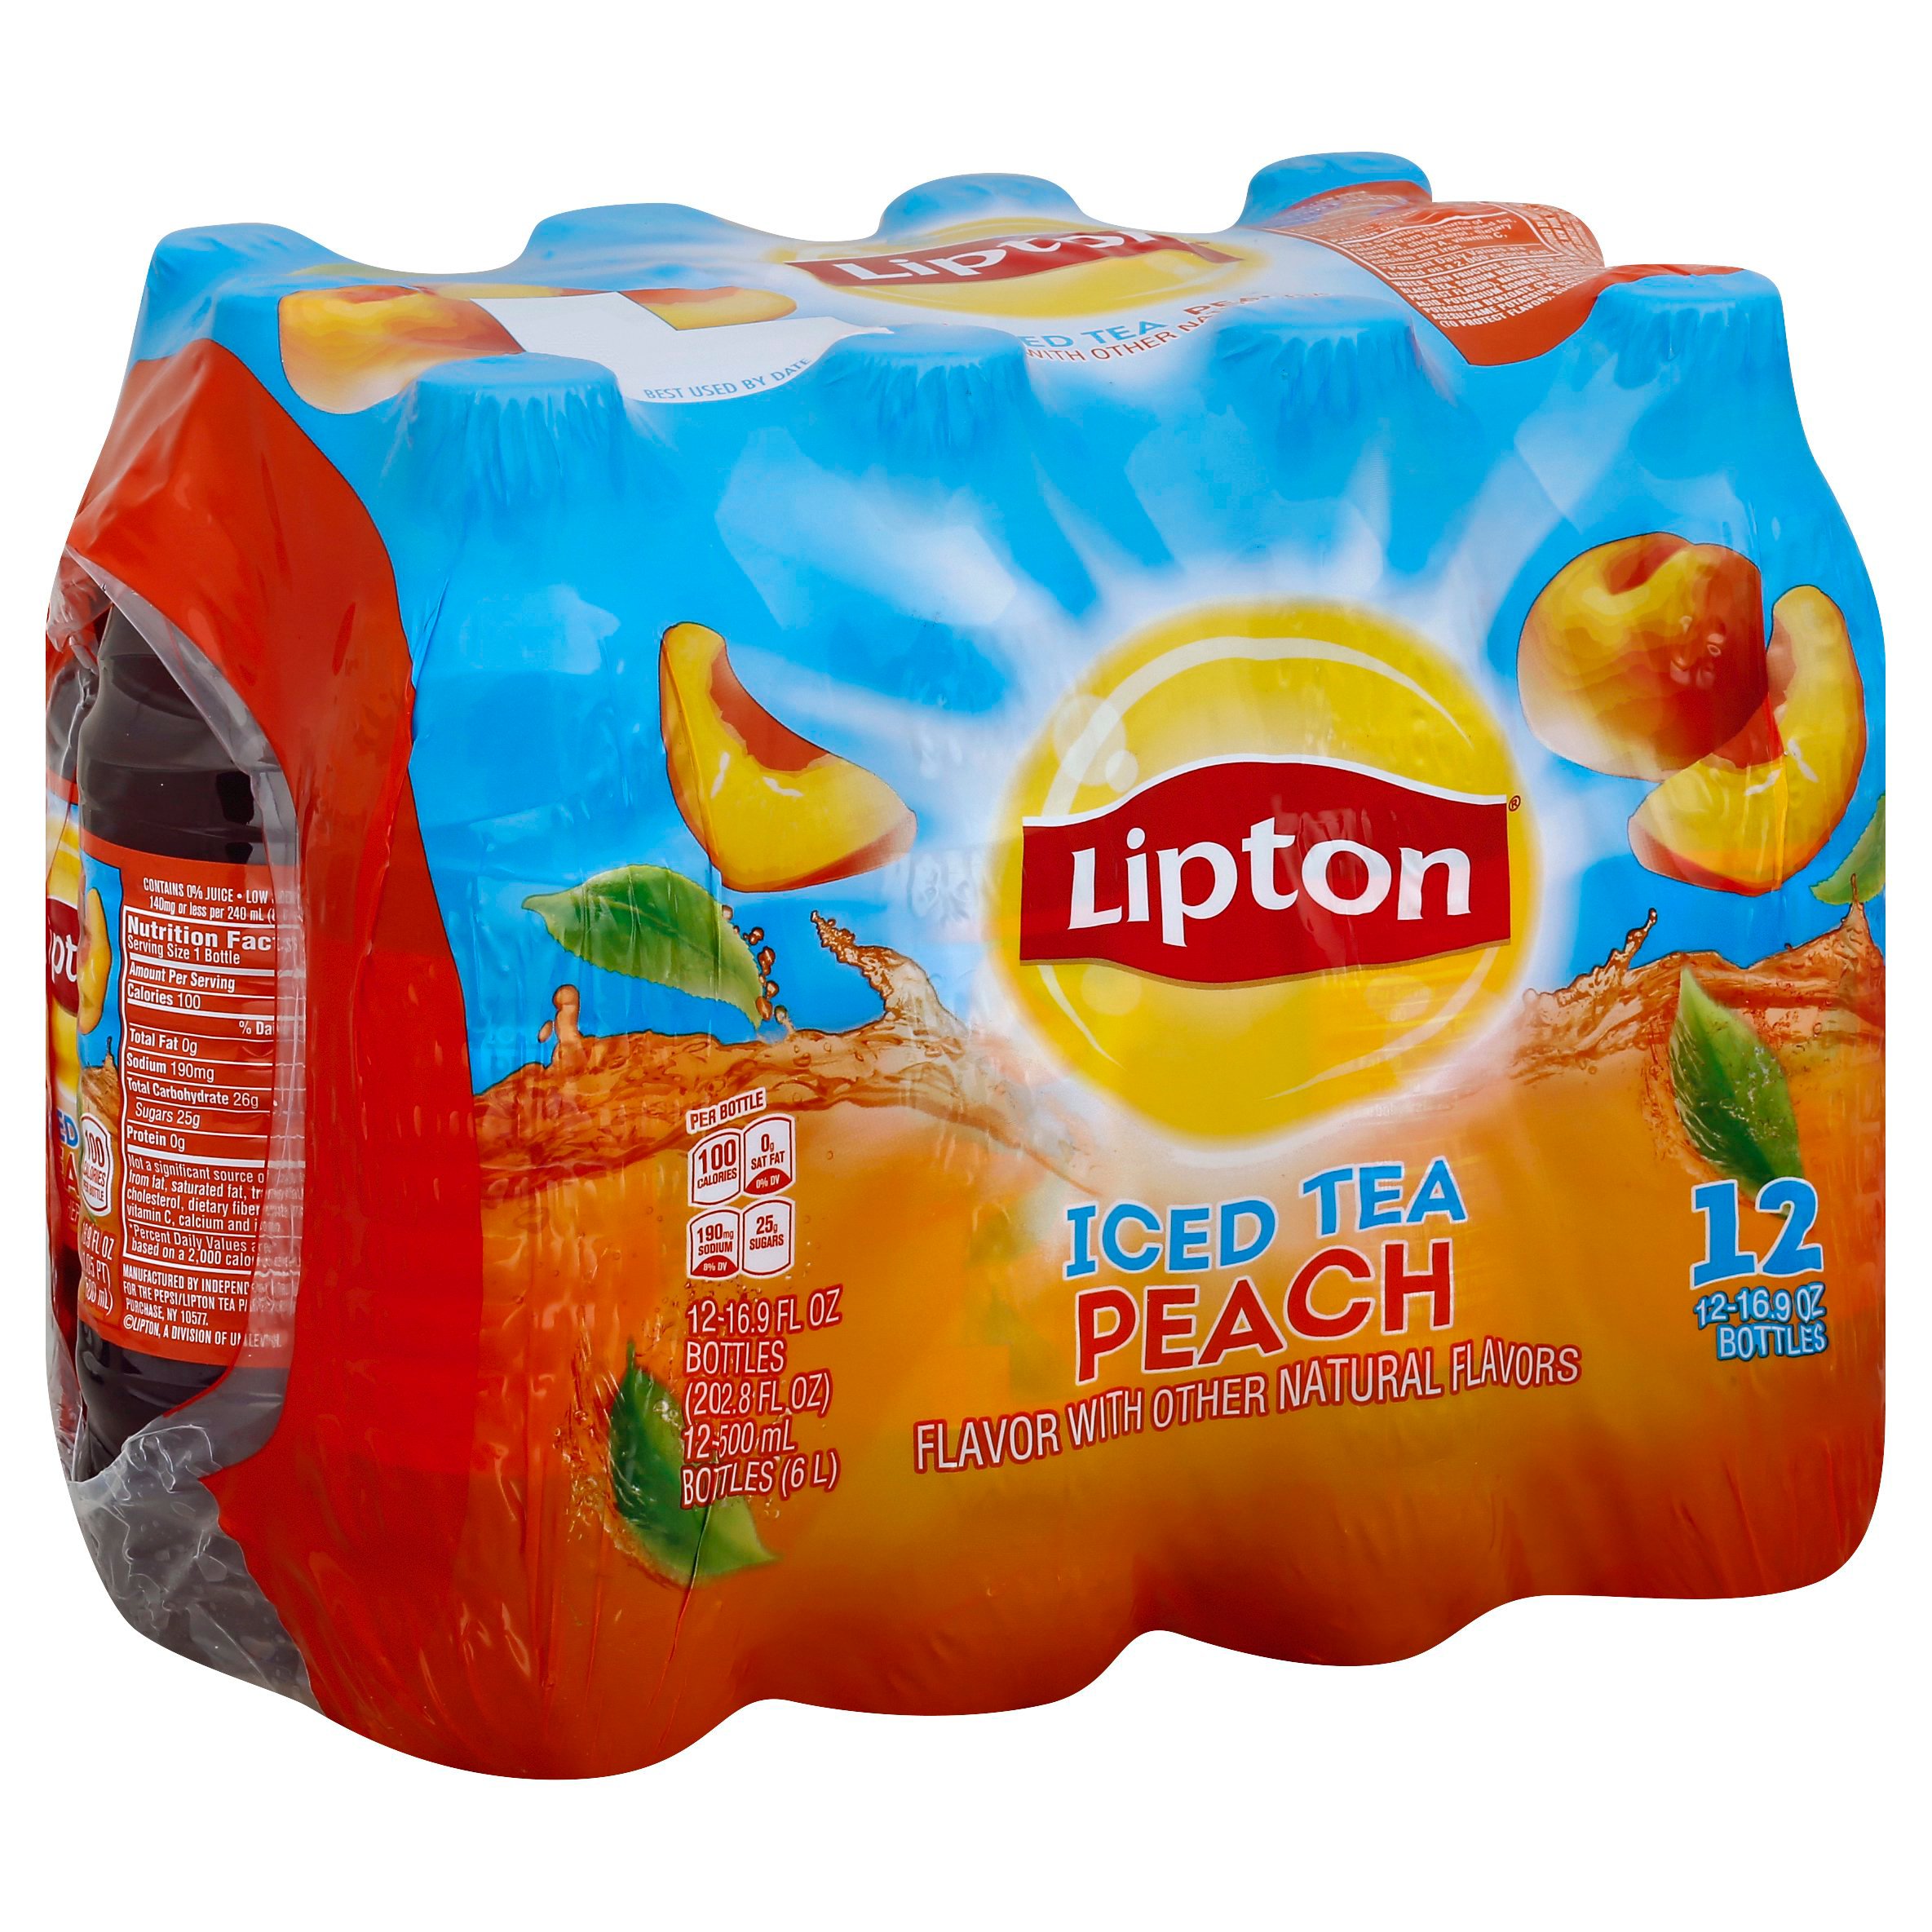 Lipton Peach Iced Tea 16.9 oz Bottles